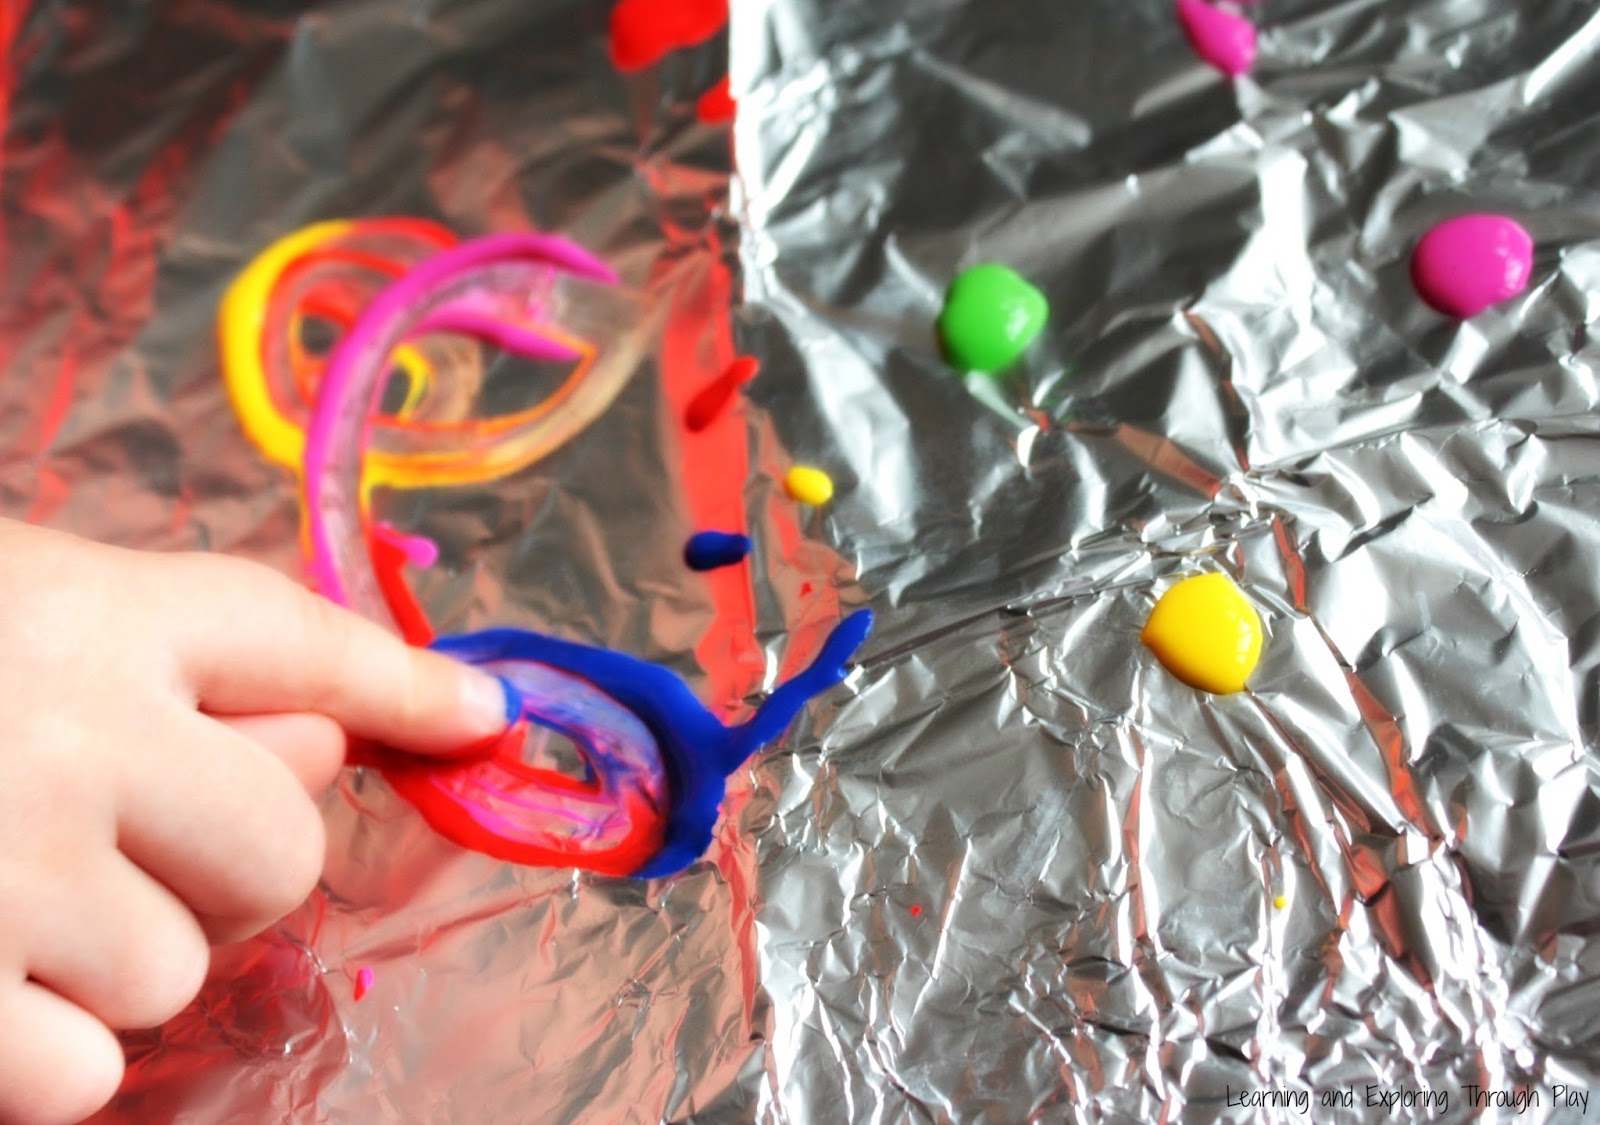 Exploring Tin Foil - Laughing Kids Learn